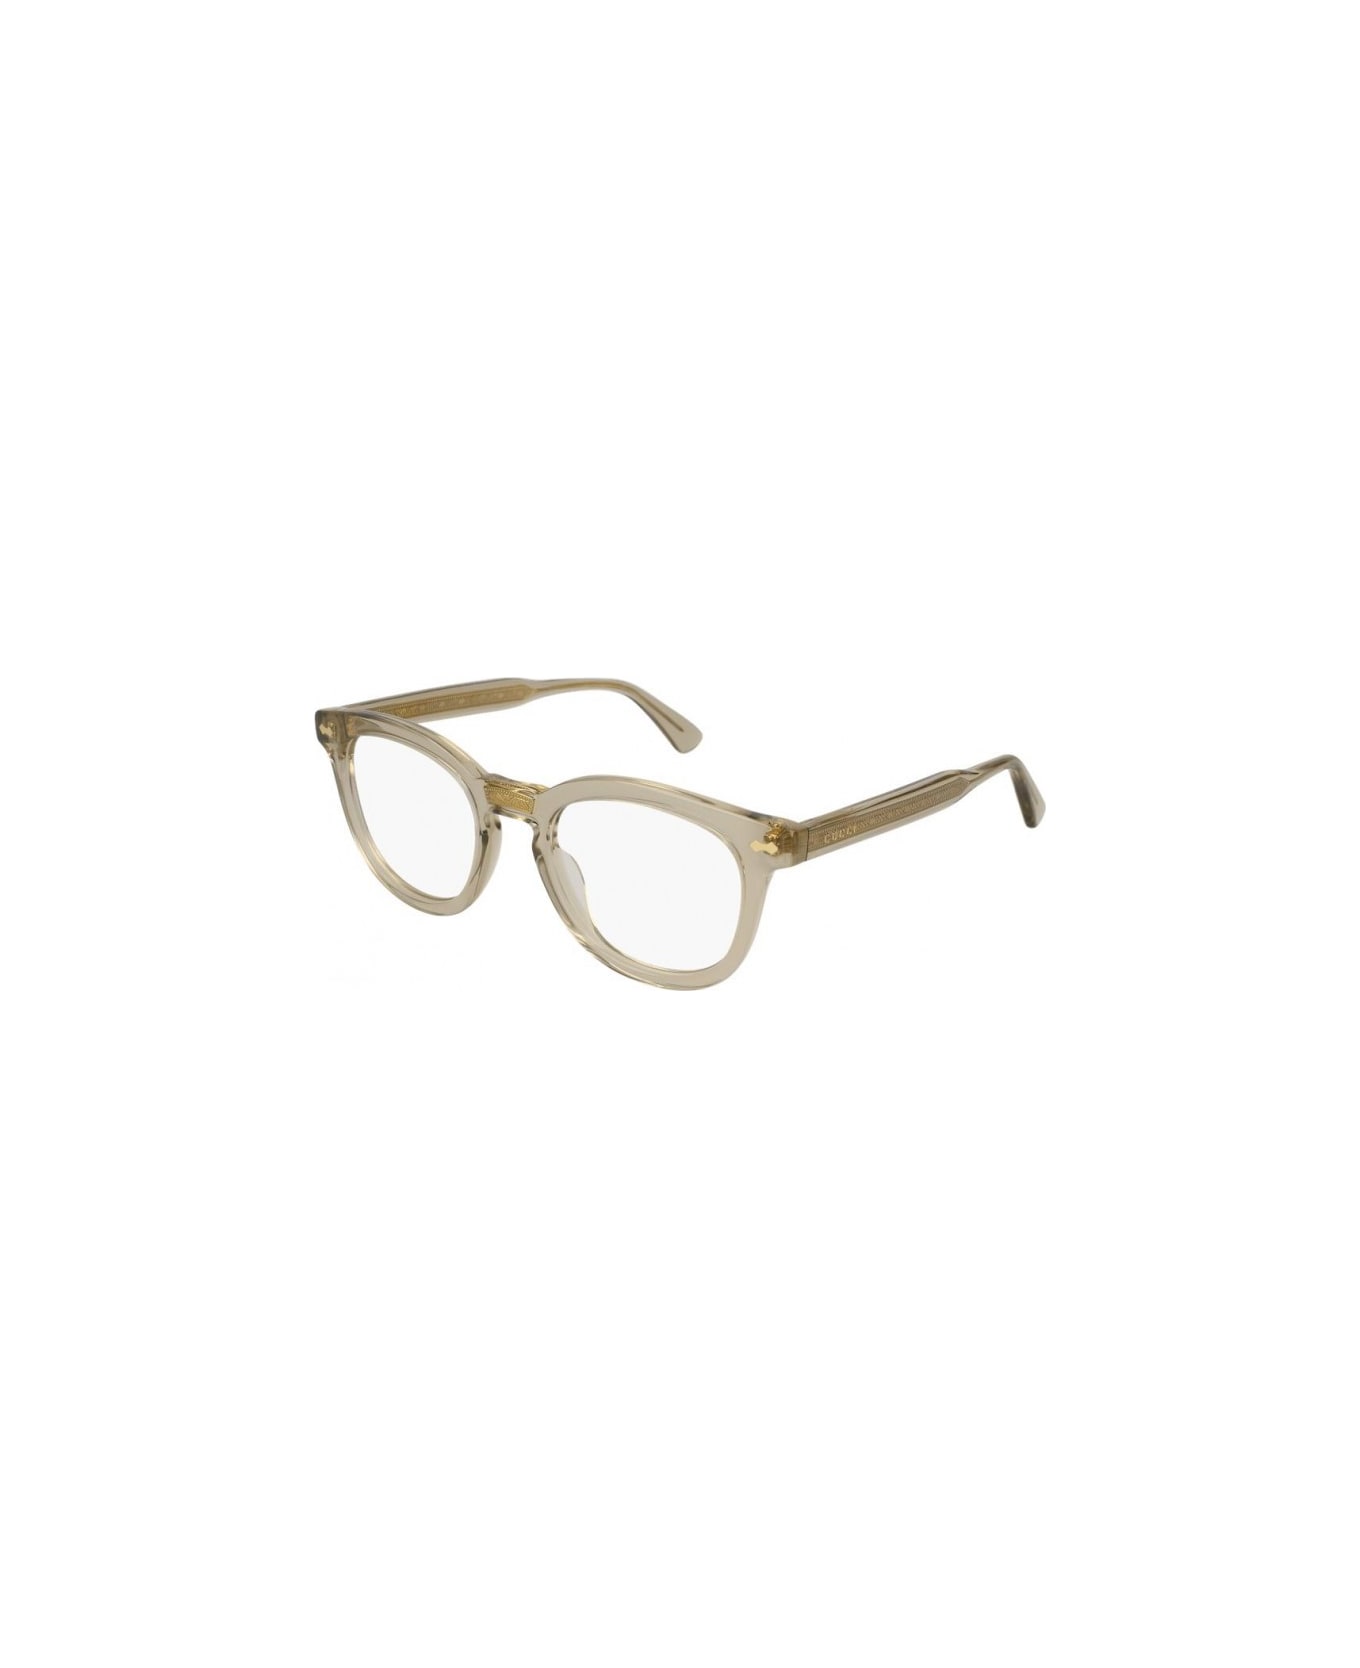 Gucci Eyewear Gg0183o Glasses - Avorio アイウェア